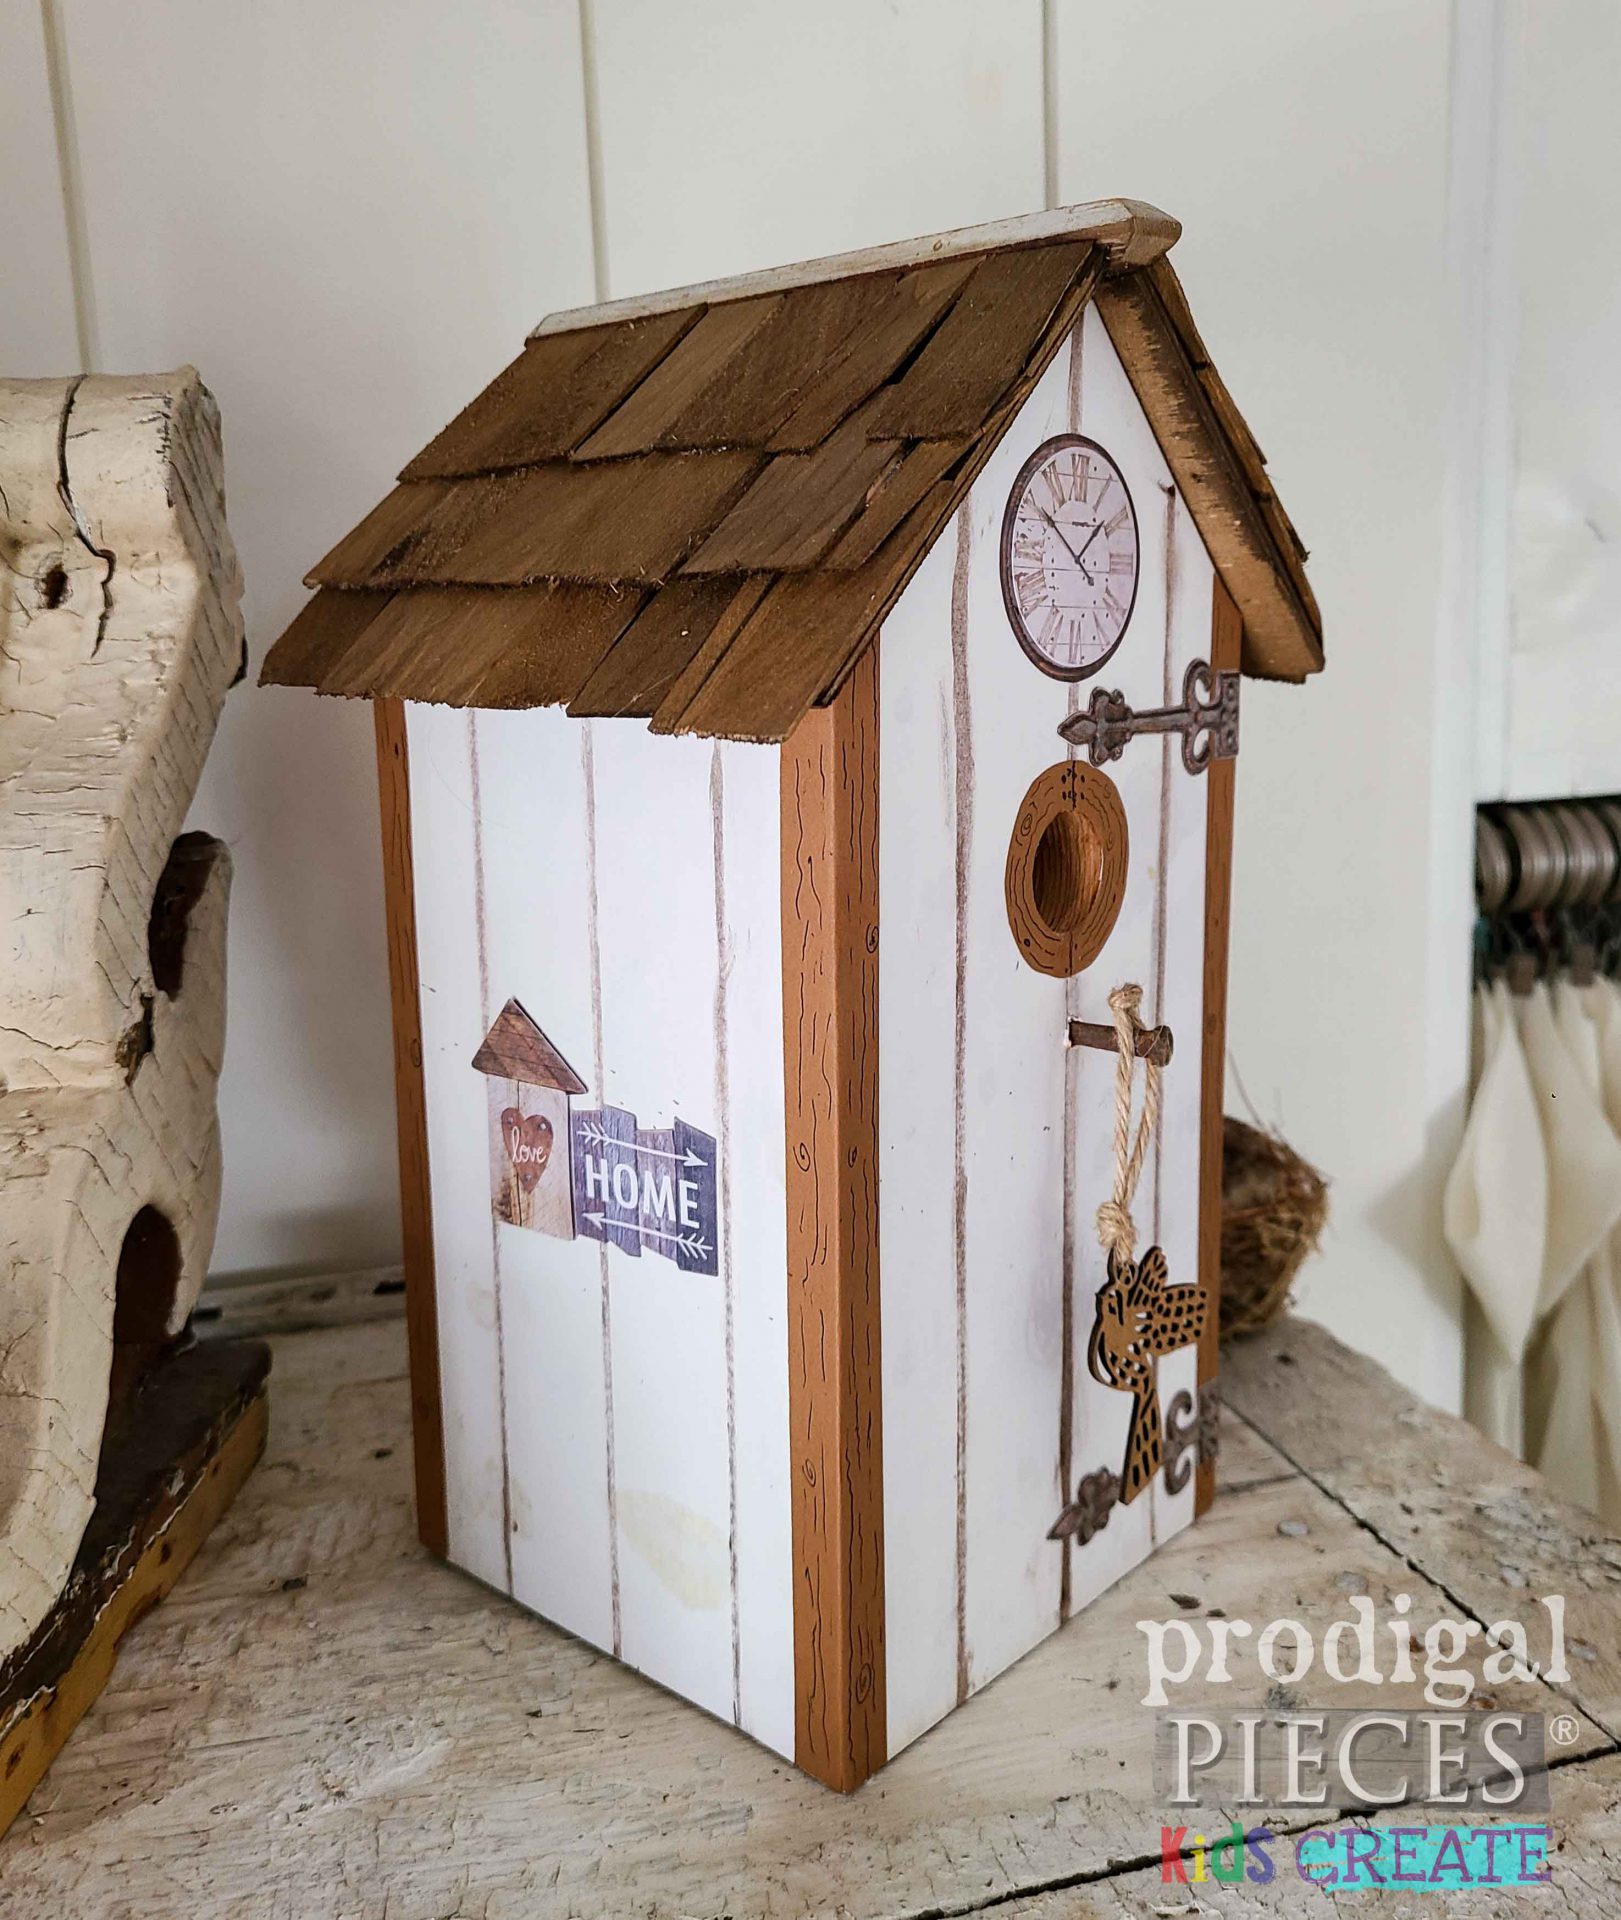 Rustic Farmhouse Birdhouse with KIDS Create by Prodigal Pieces | prodigalpieces.com #prodigalpieces #spring #diy #homedecor